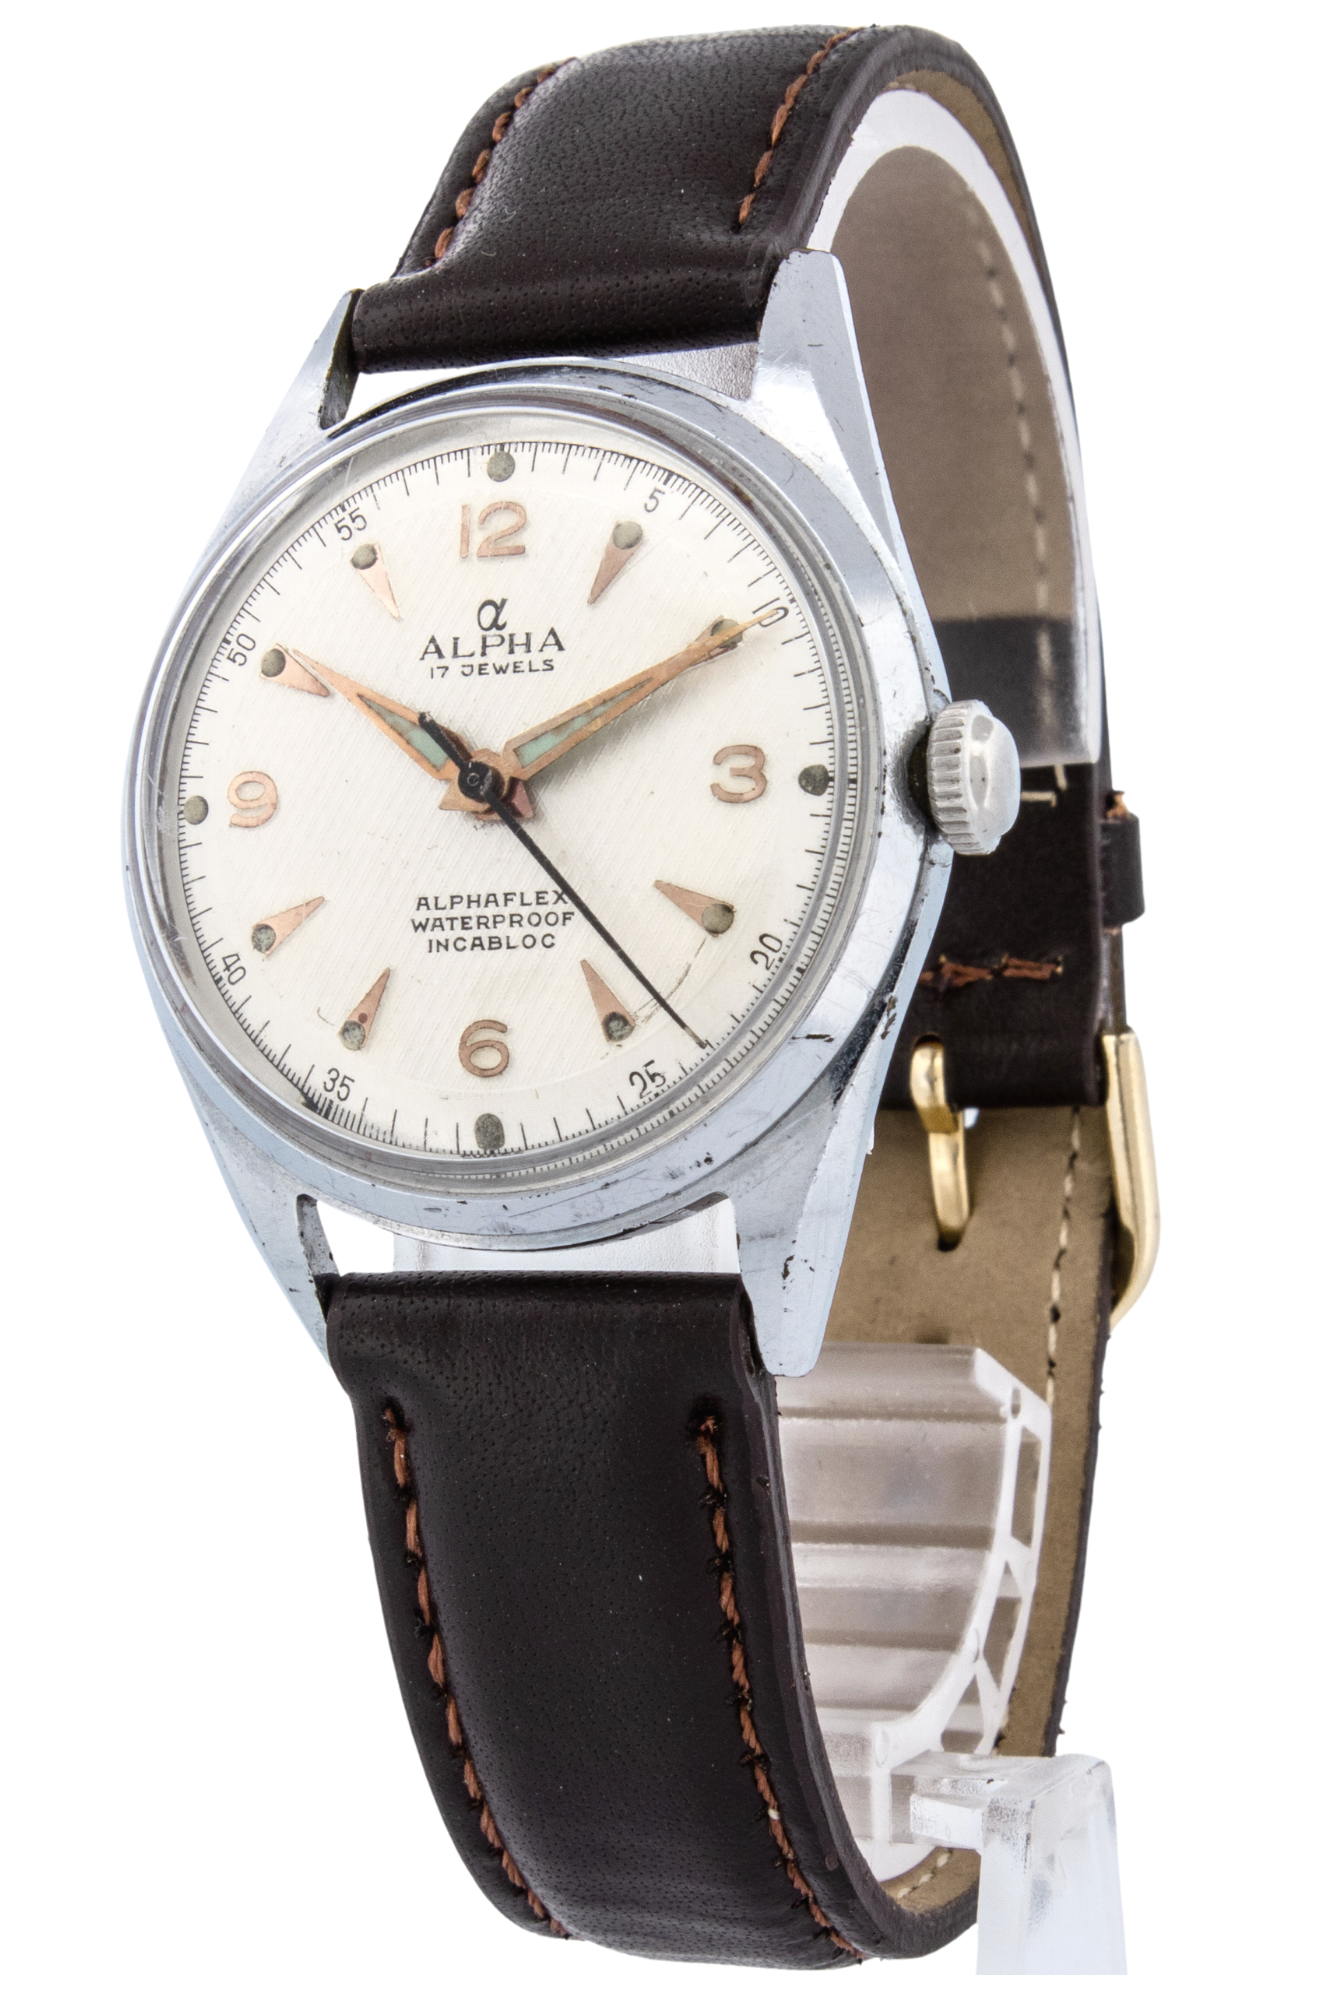 Alpha Explorer mechanical automatic men's watch sapphire crystal 39mm | eBay